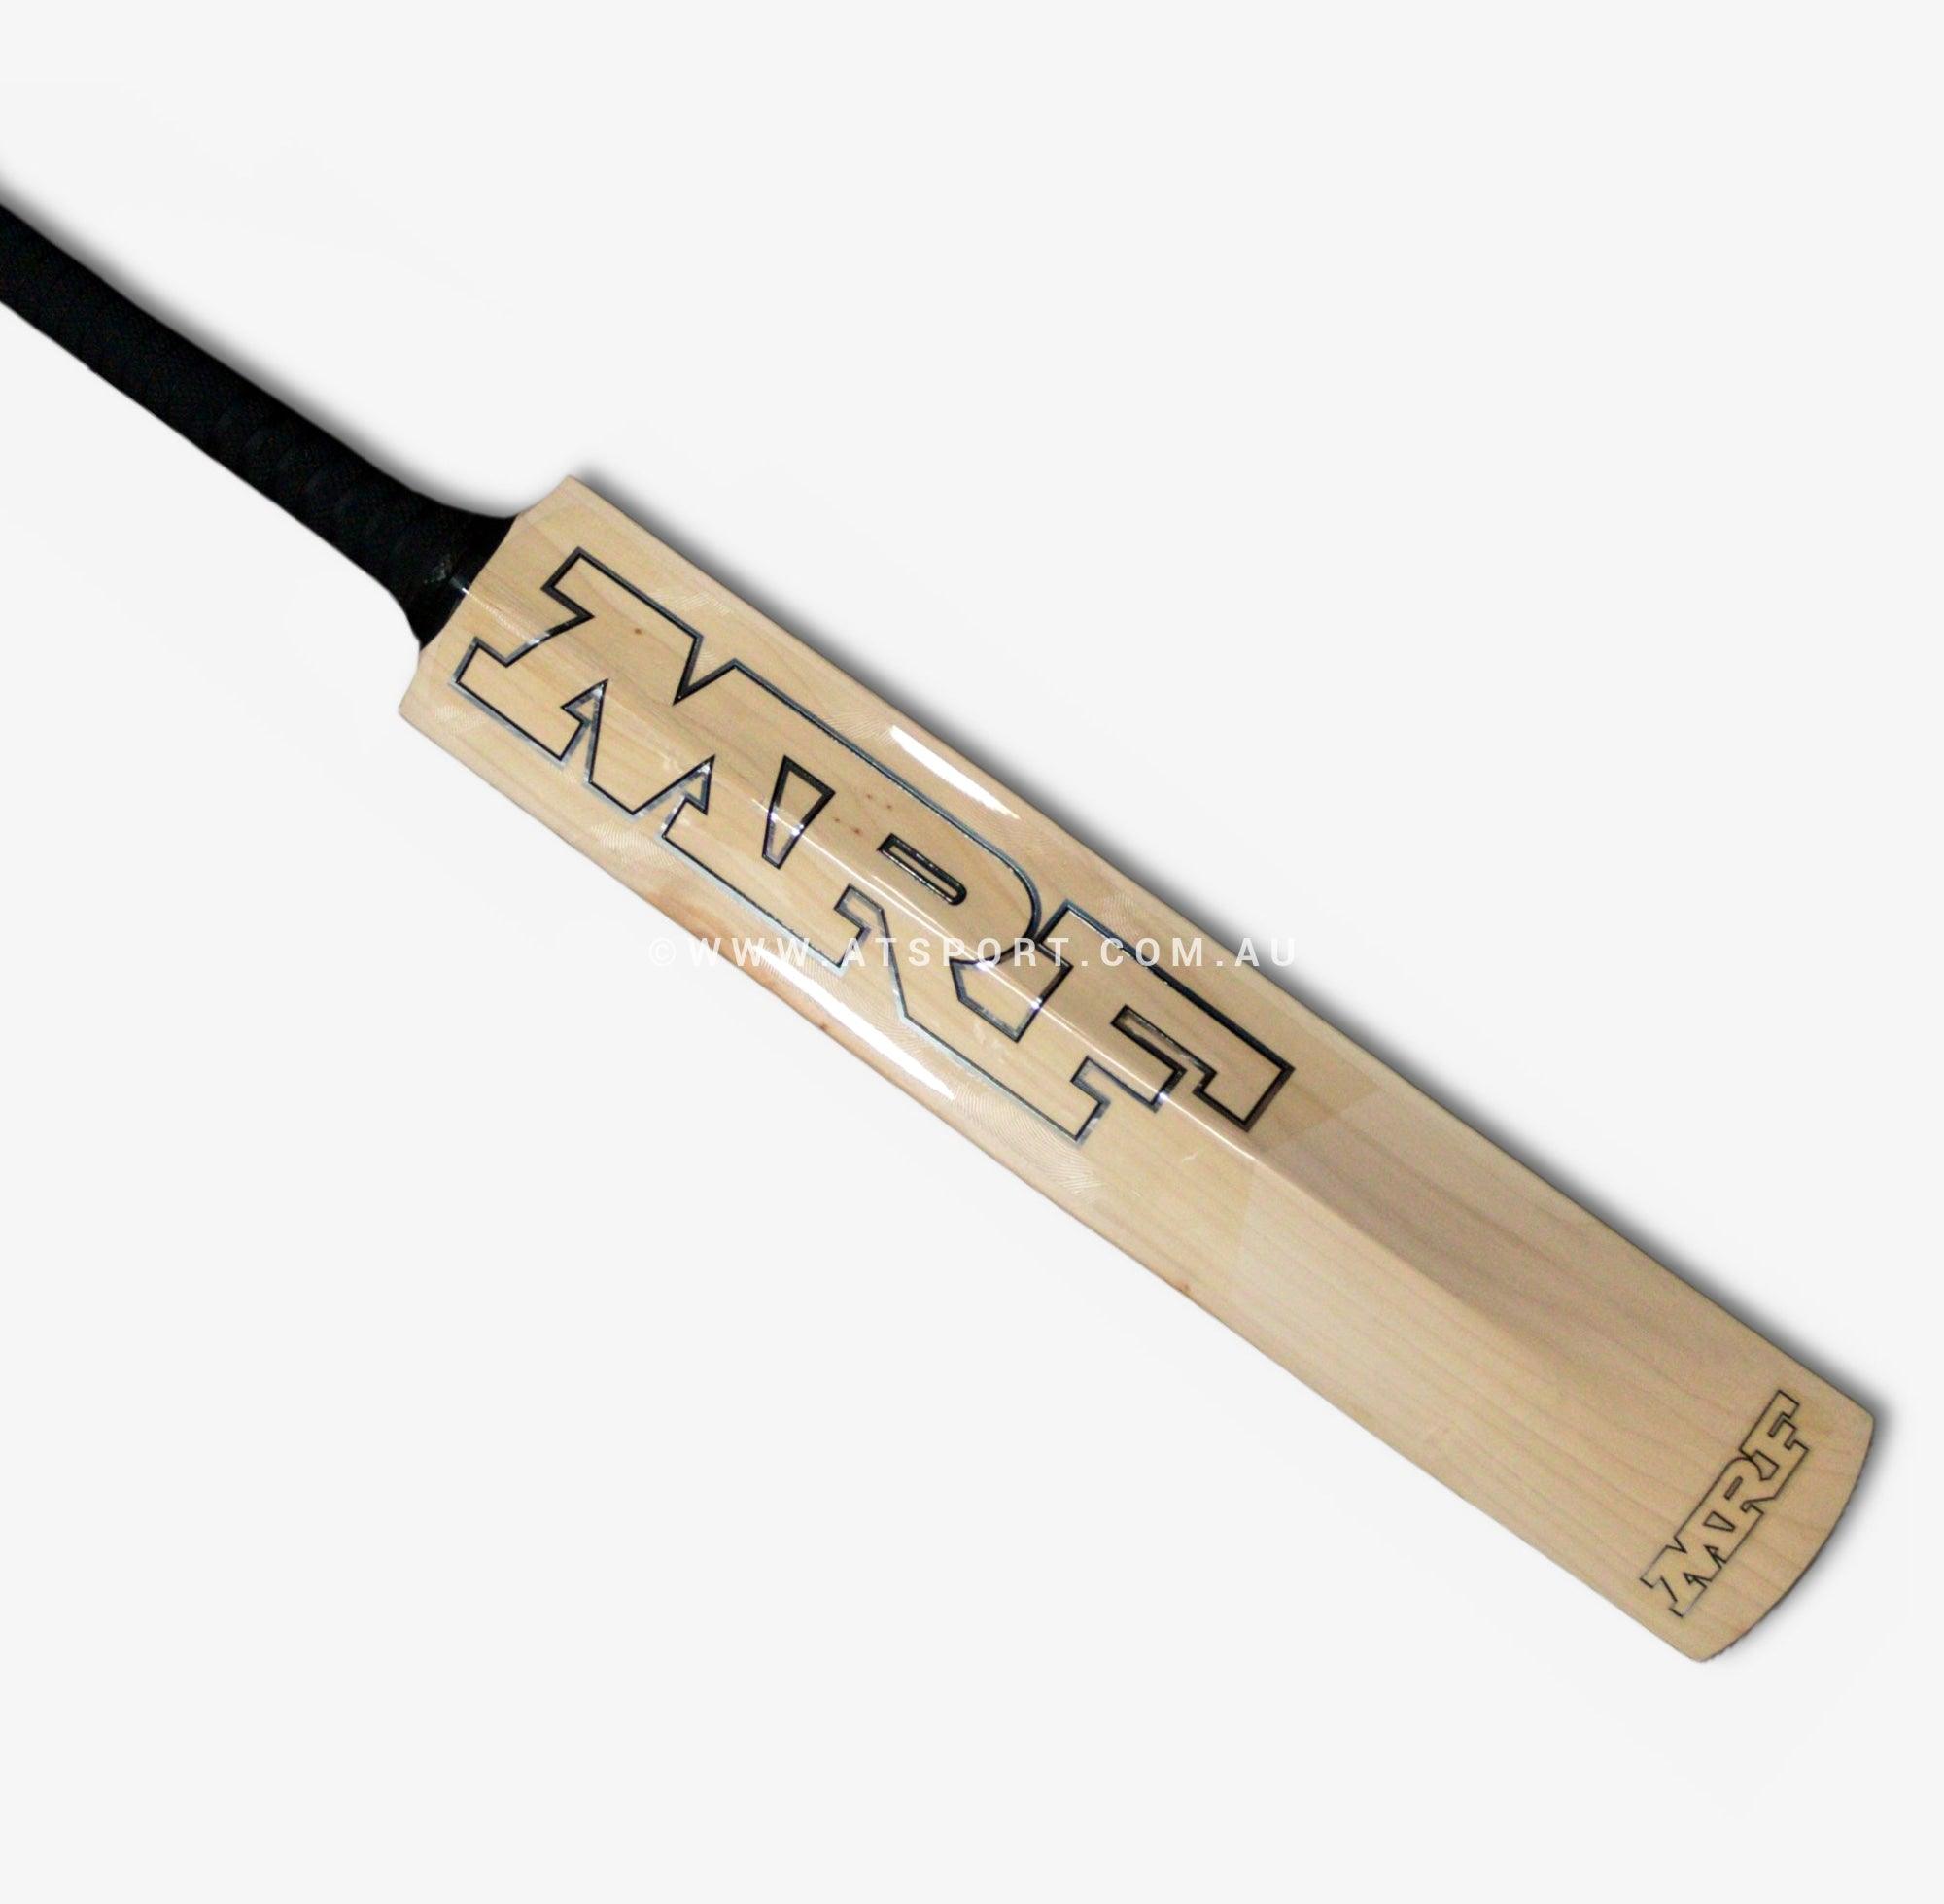 MRF Wizard Classic Edition English Willow Cricket Bat - SH - AT Sports